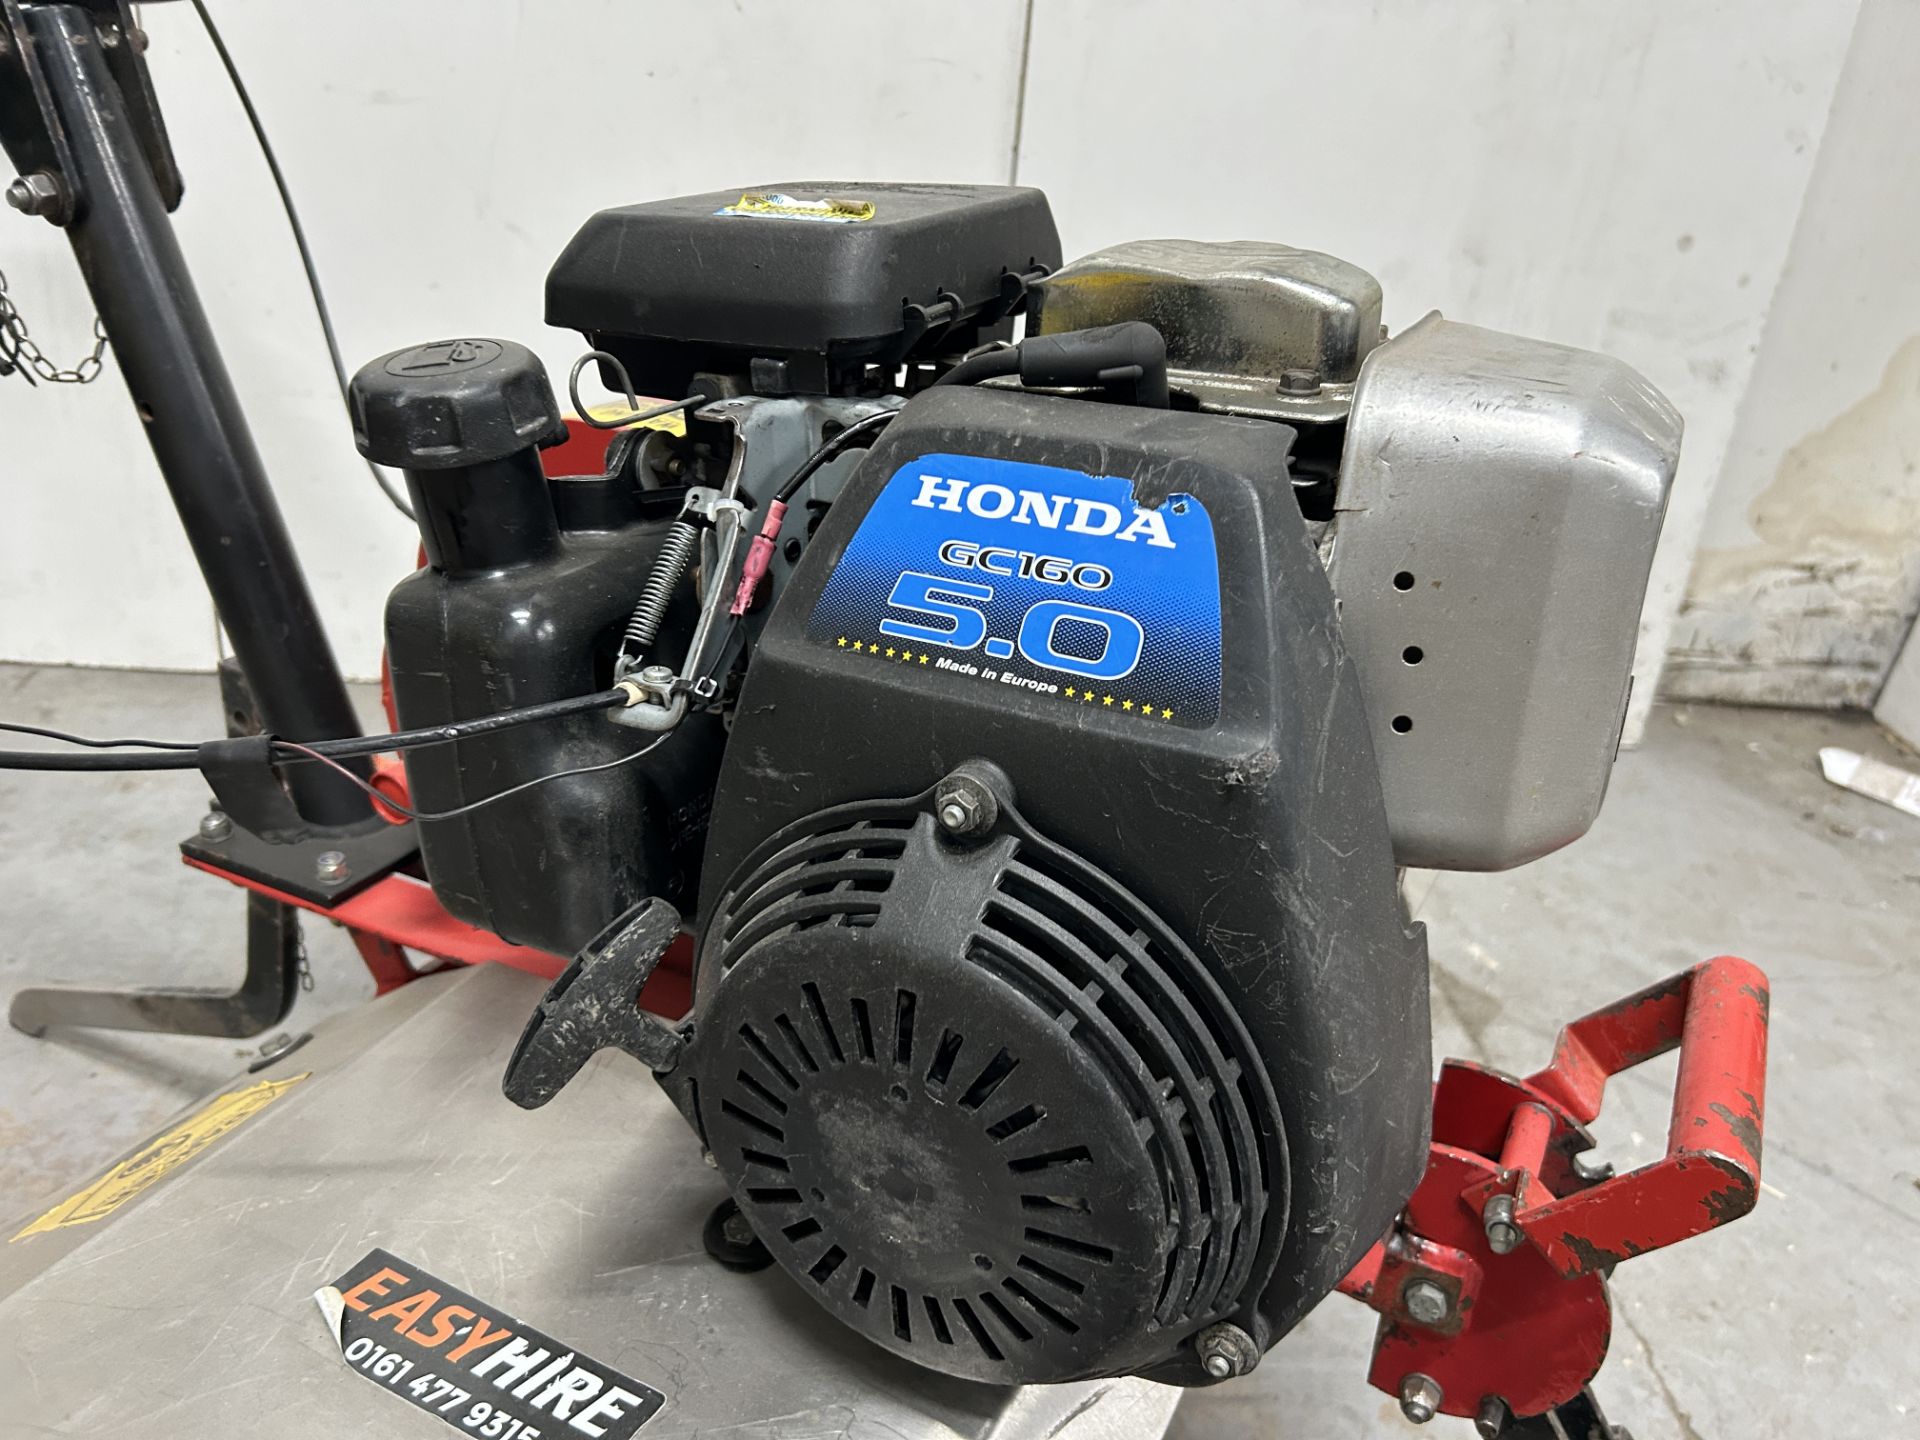 Industrial Tiller/Cultivator w/ Honda GC160 Petrol Engine - Image 3 of 6